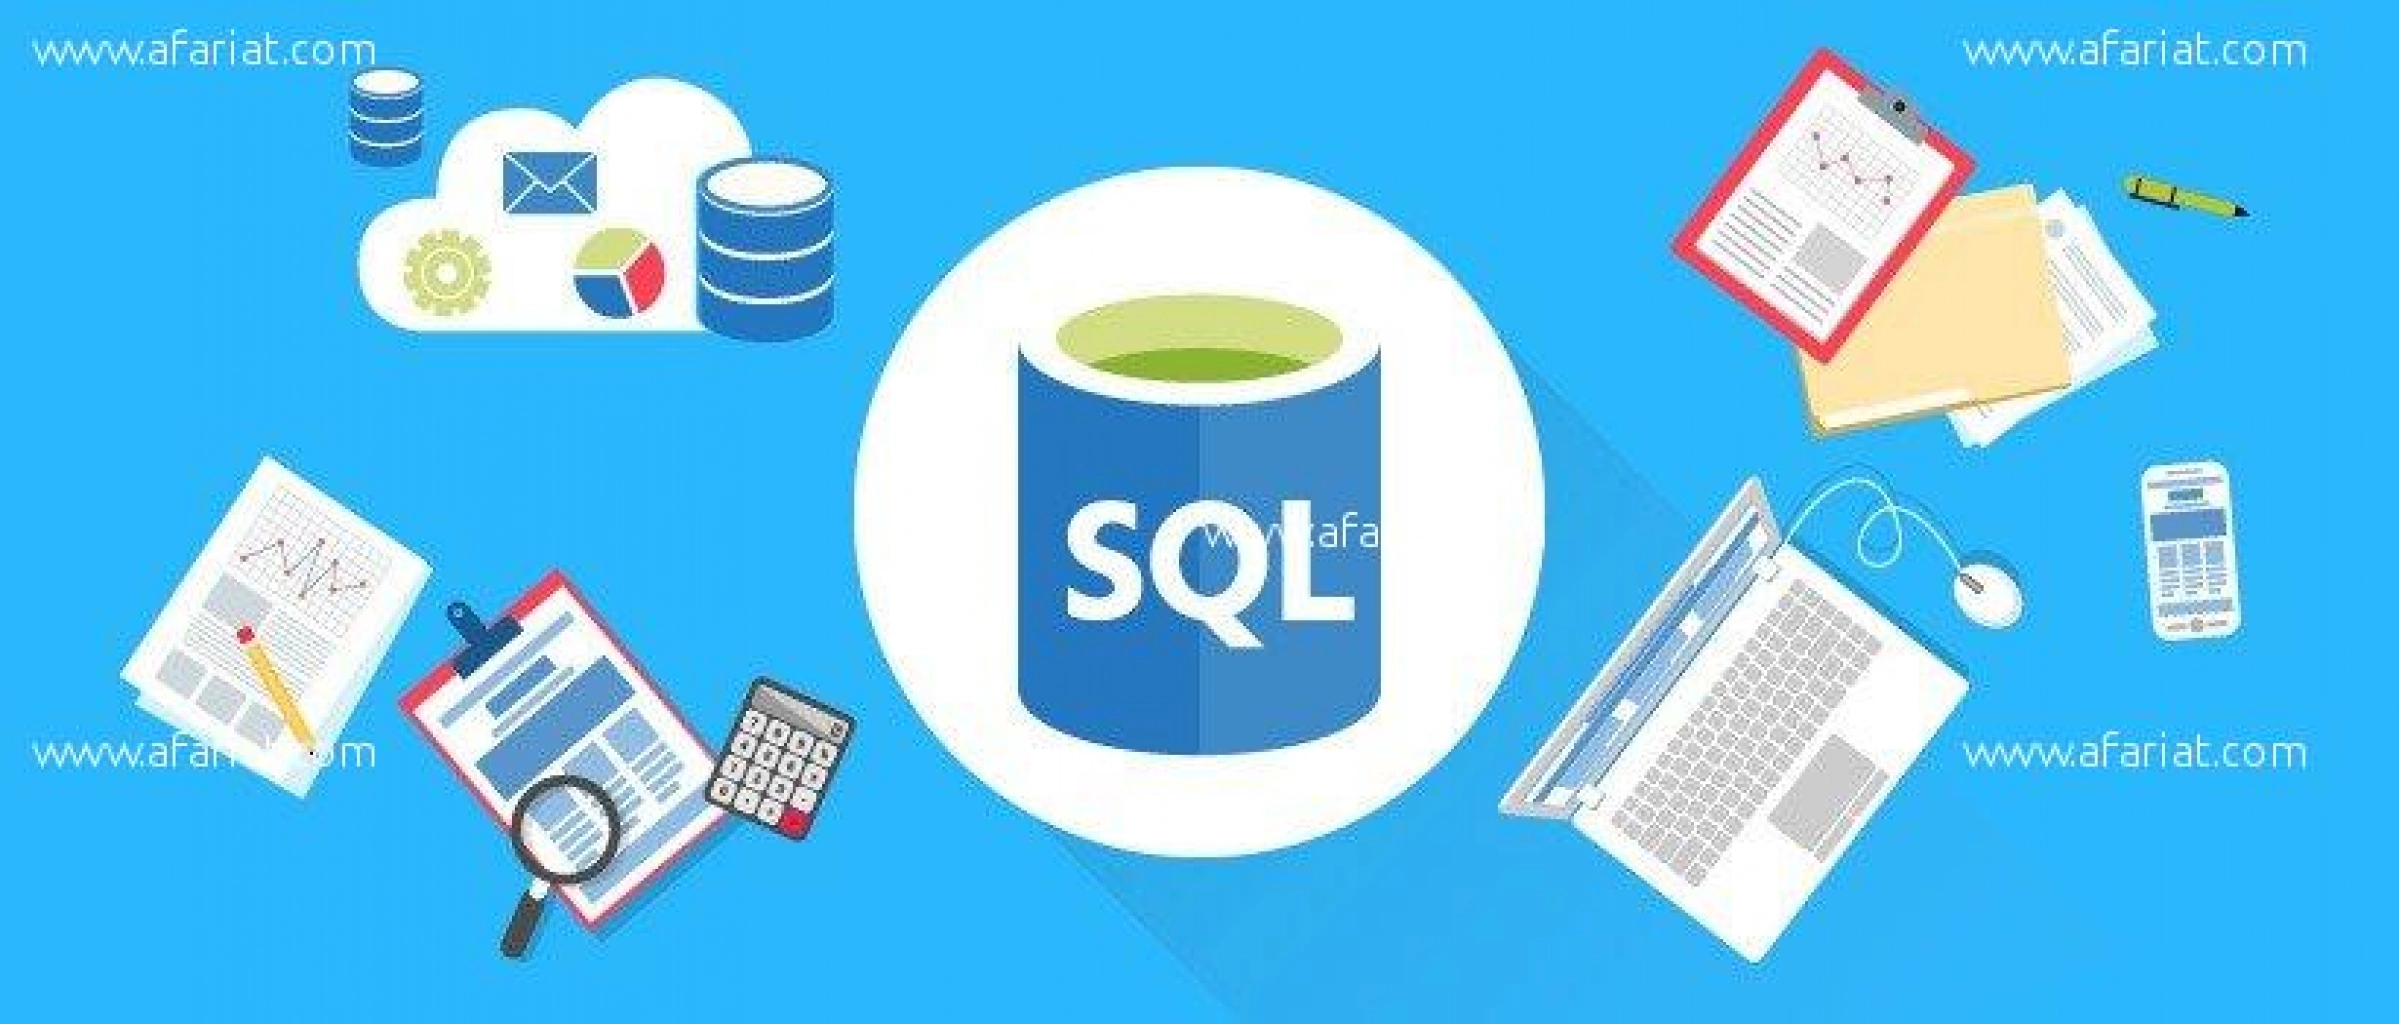 Formation en Bases de données/ SQL